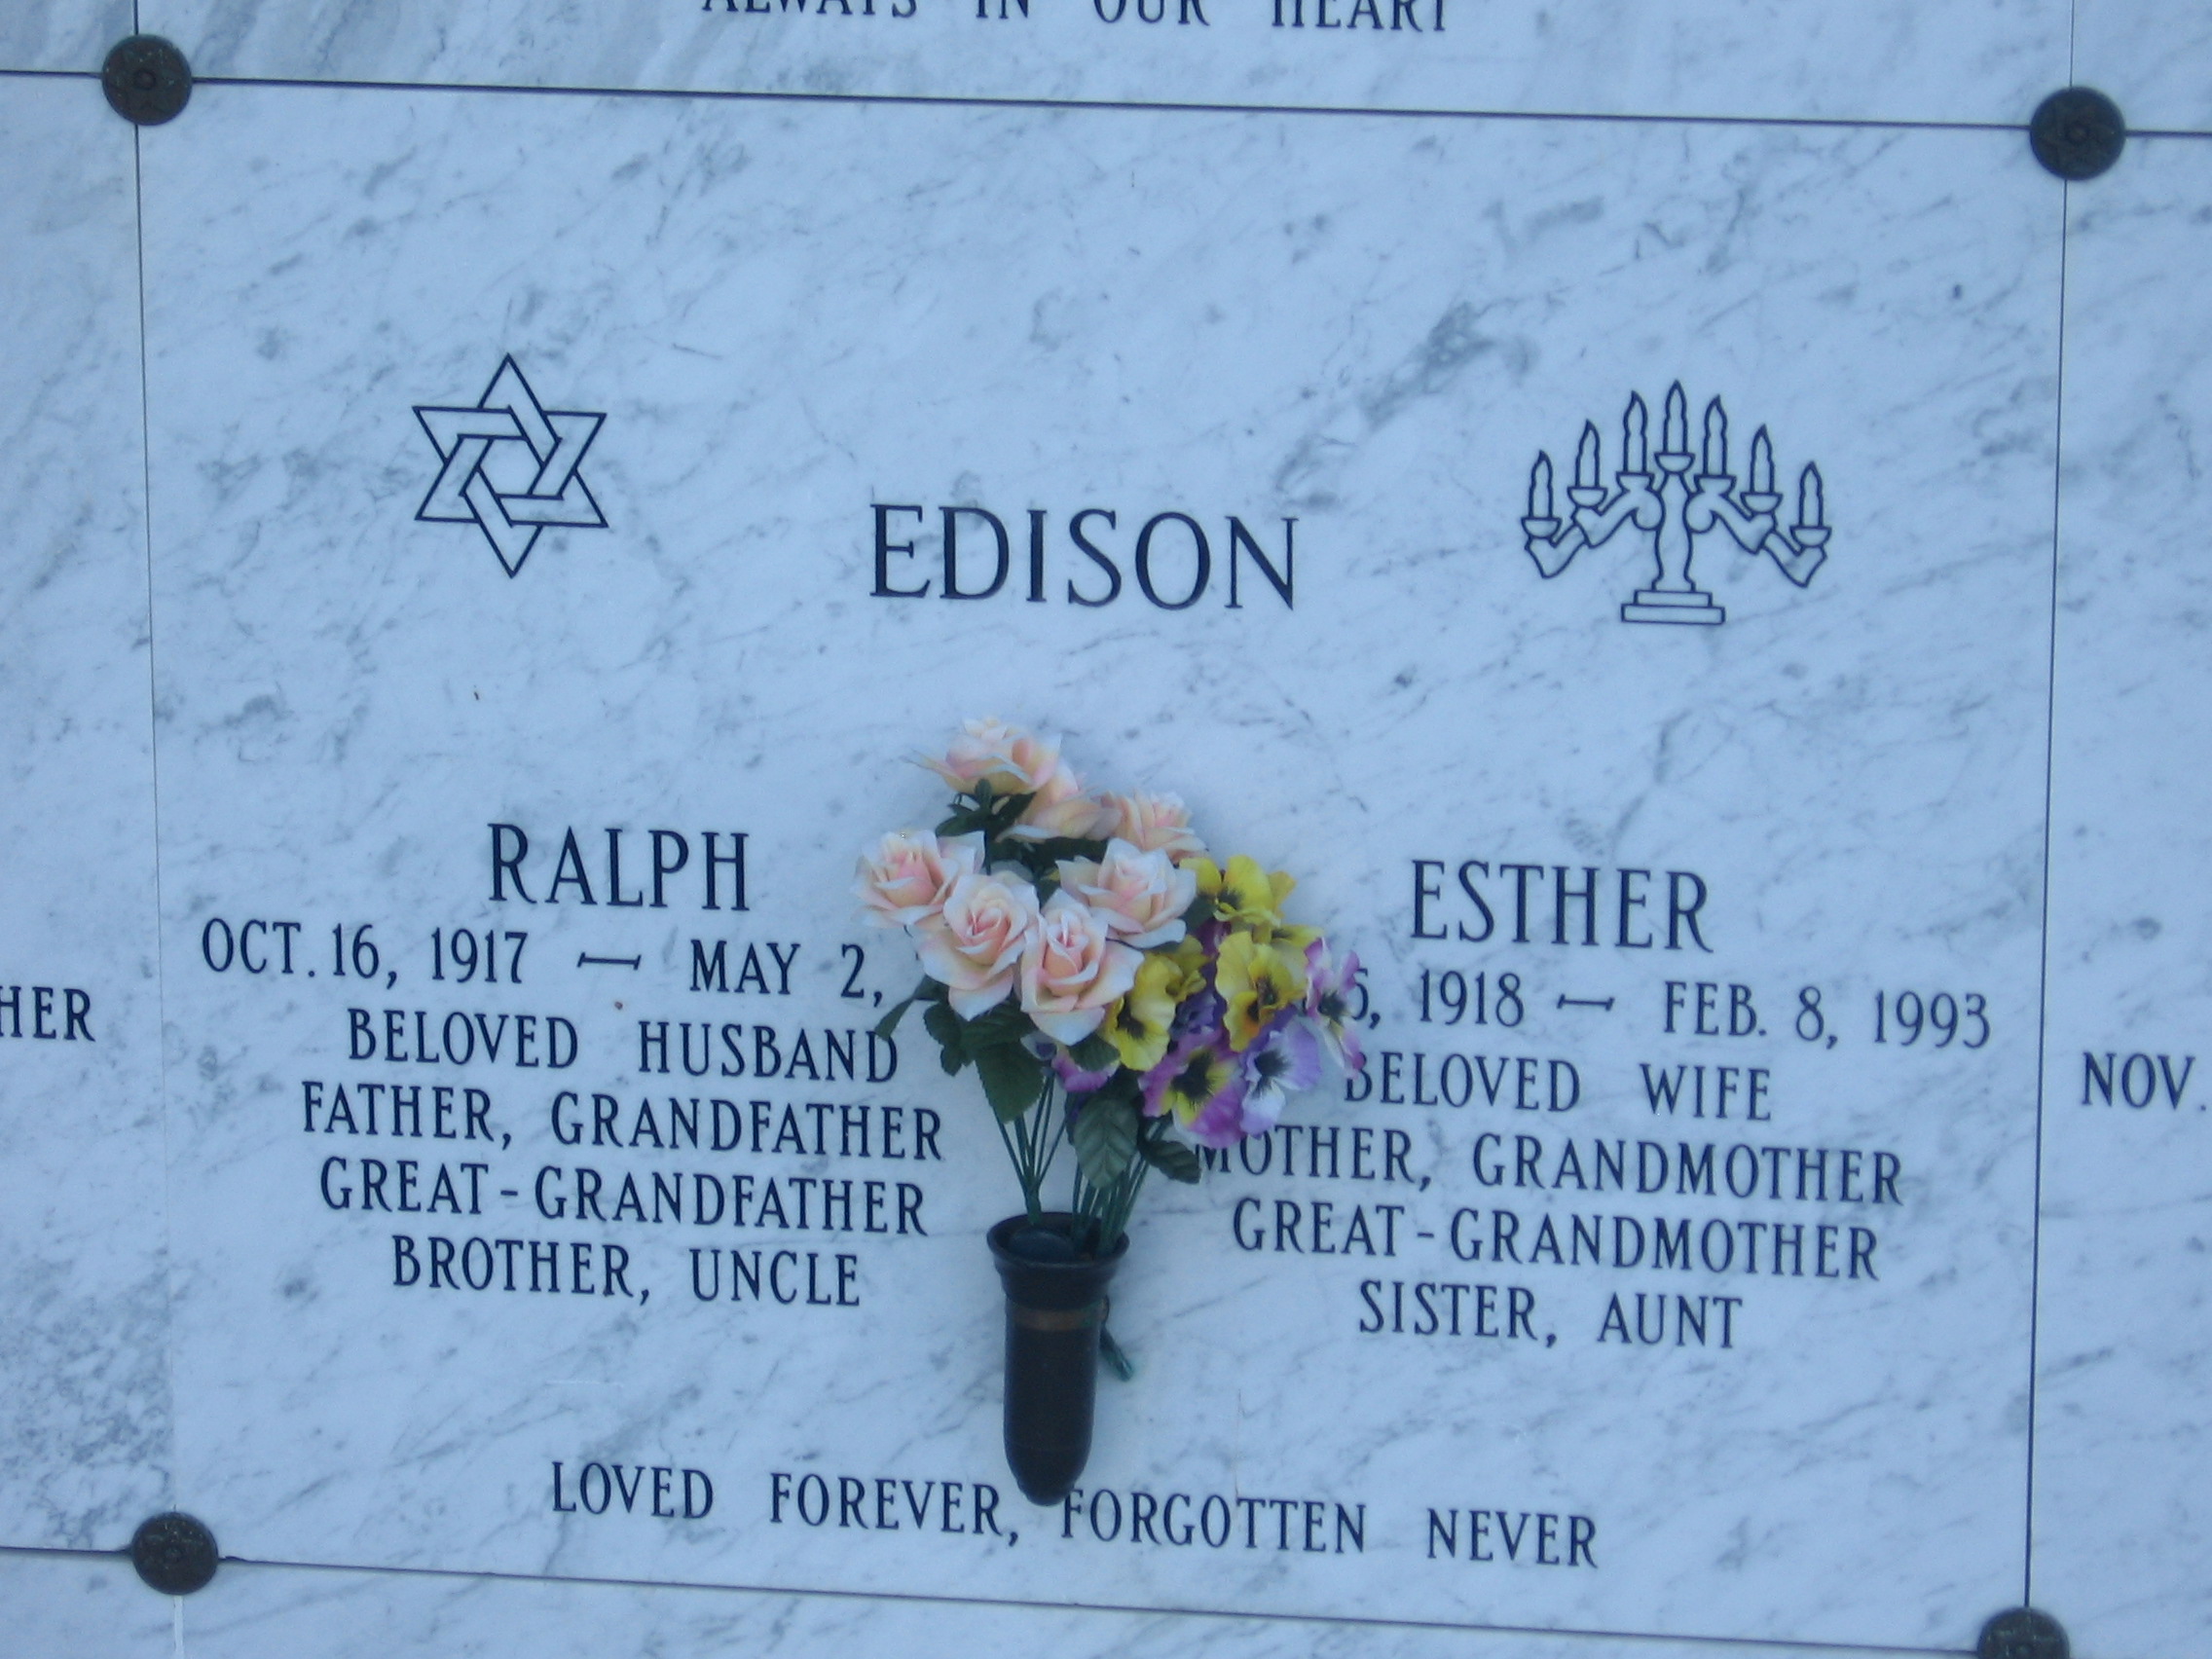 Ralph Edison